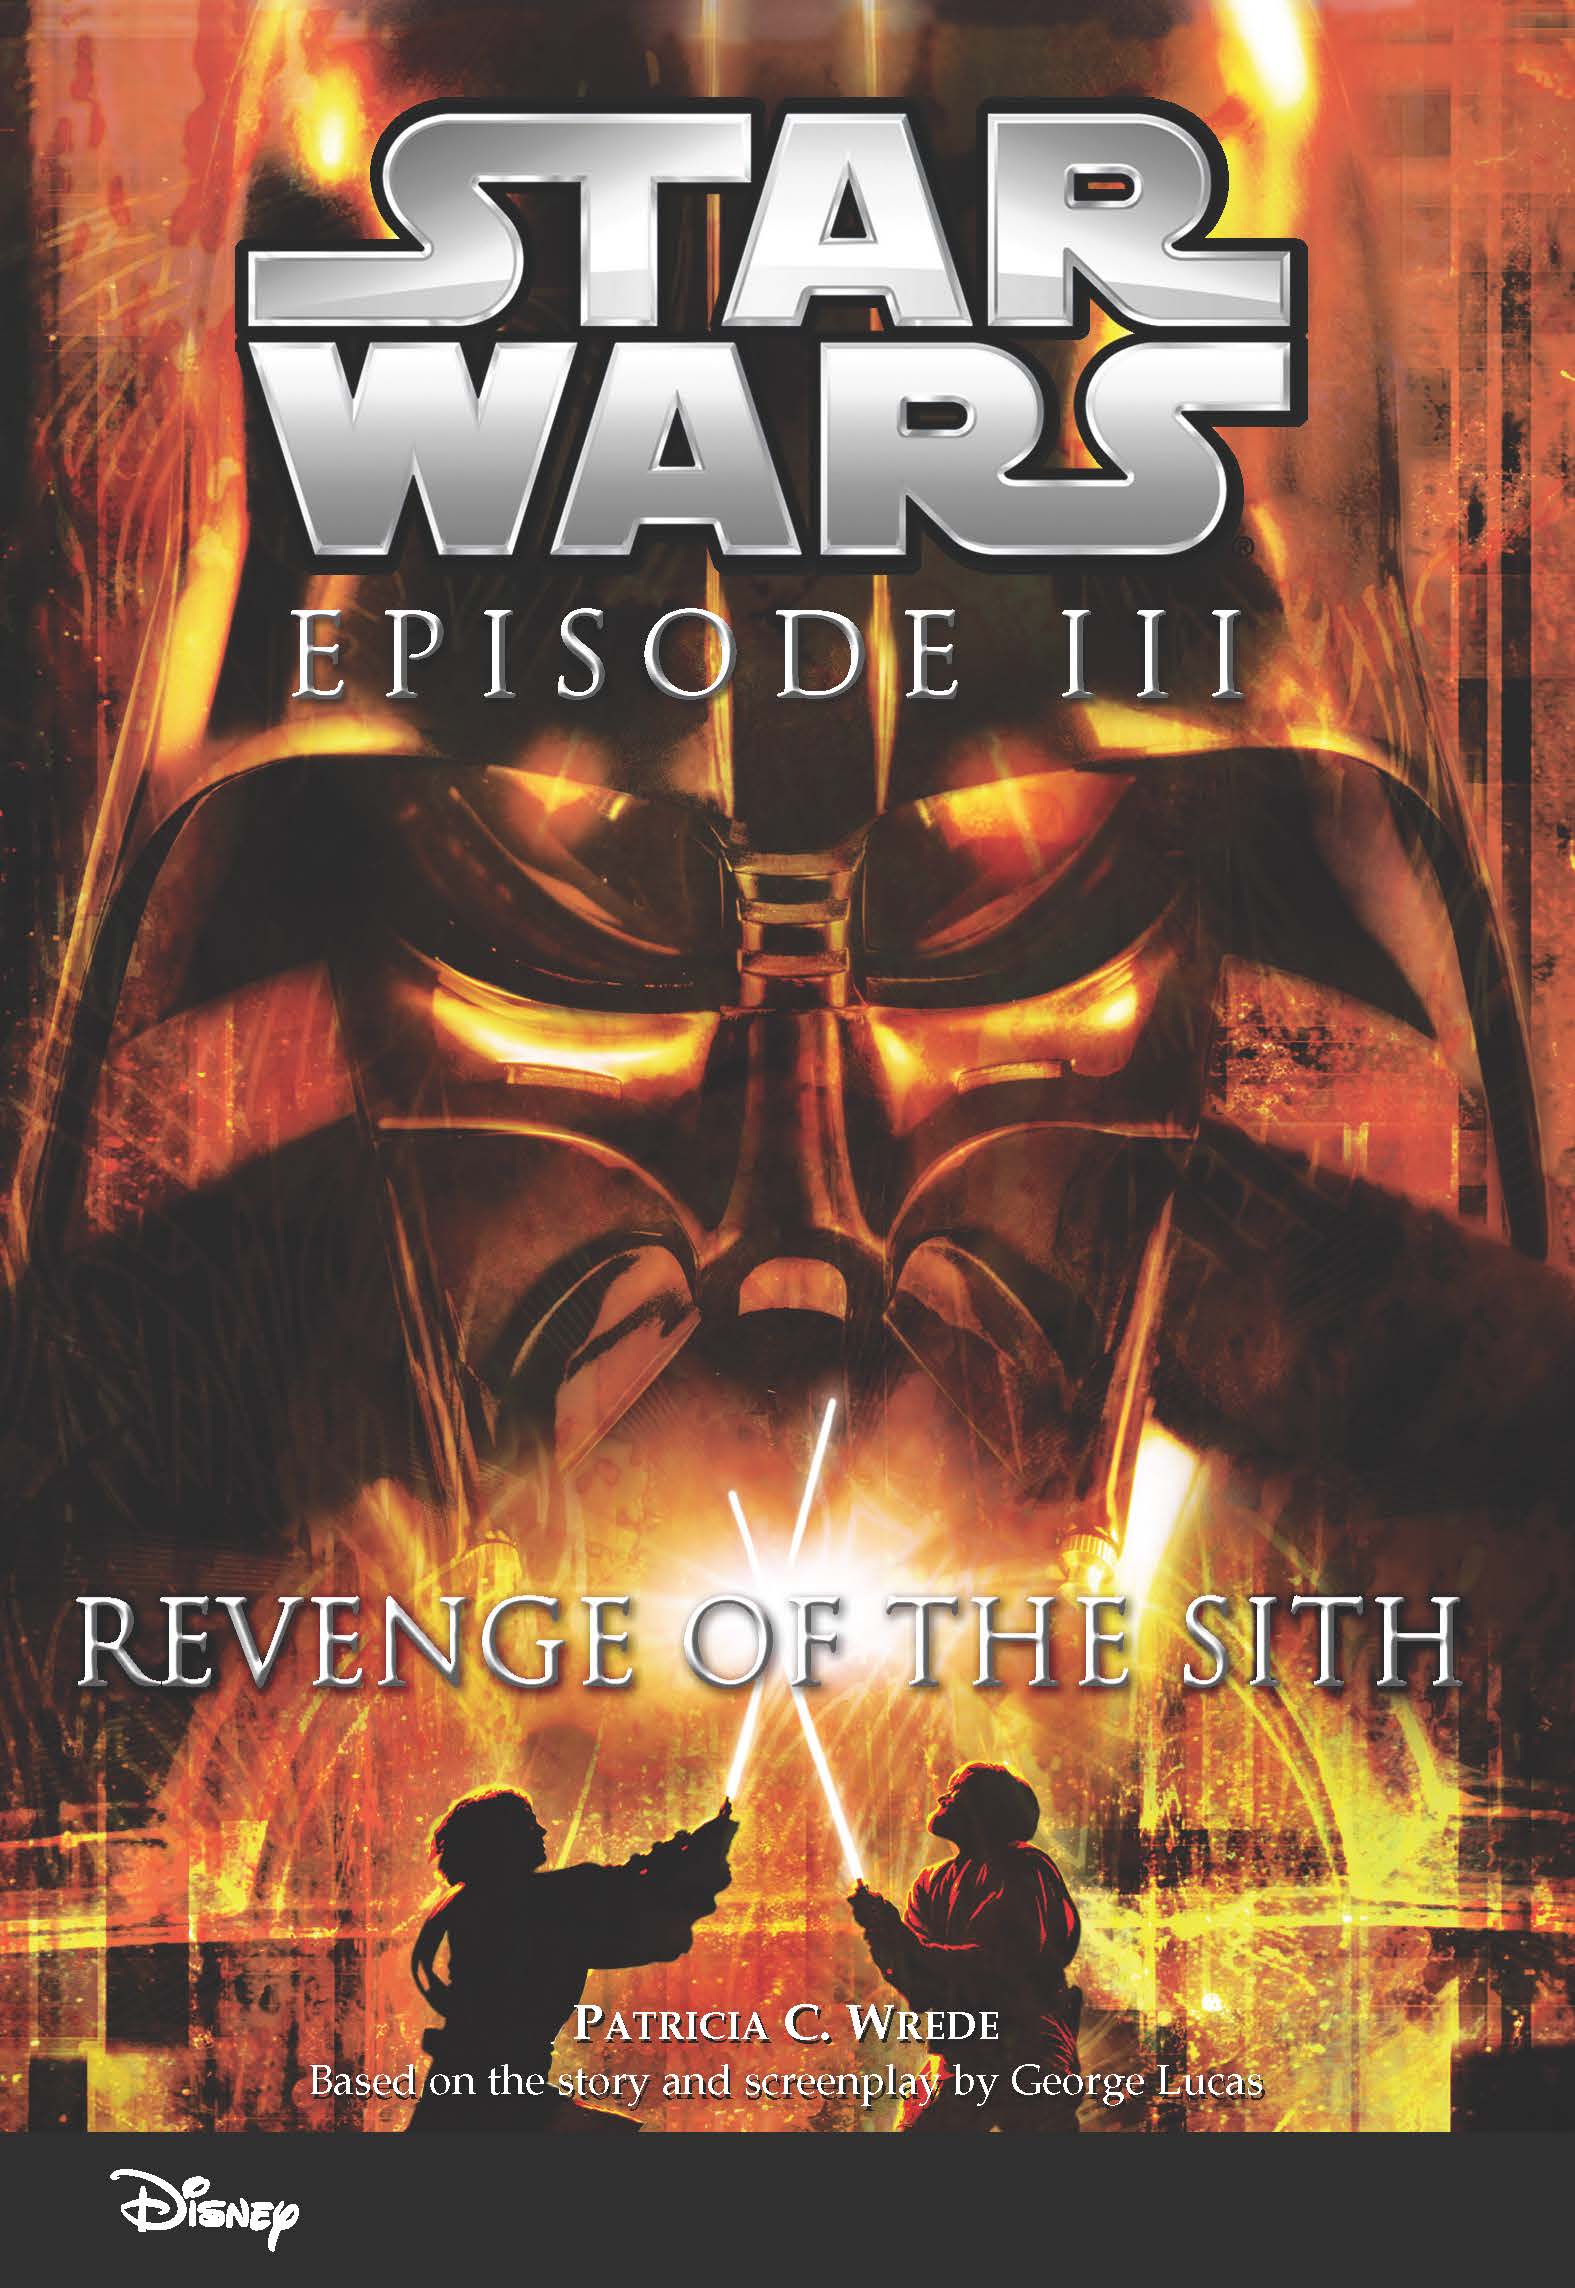 Star Wars Episode Revenge of the Sith (Volume 3) Novelization by Patricia C Wrede Wars Saga (Episodes 1-9) - Lucasfilm, Star Wars Books